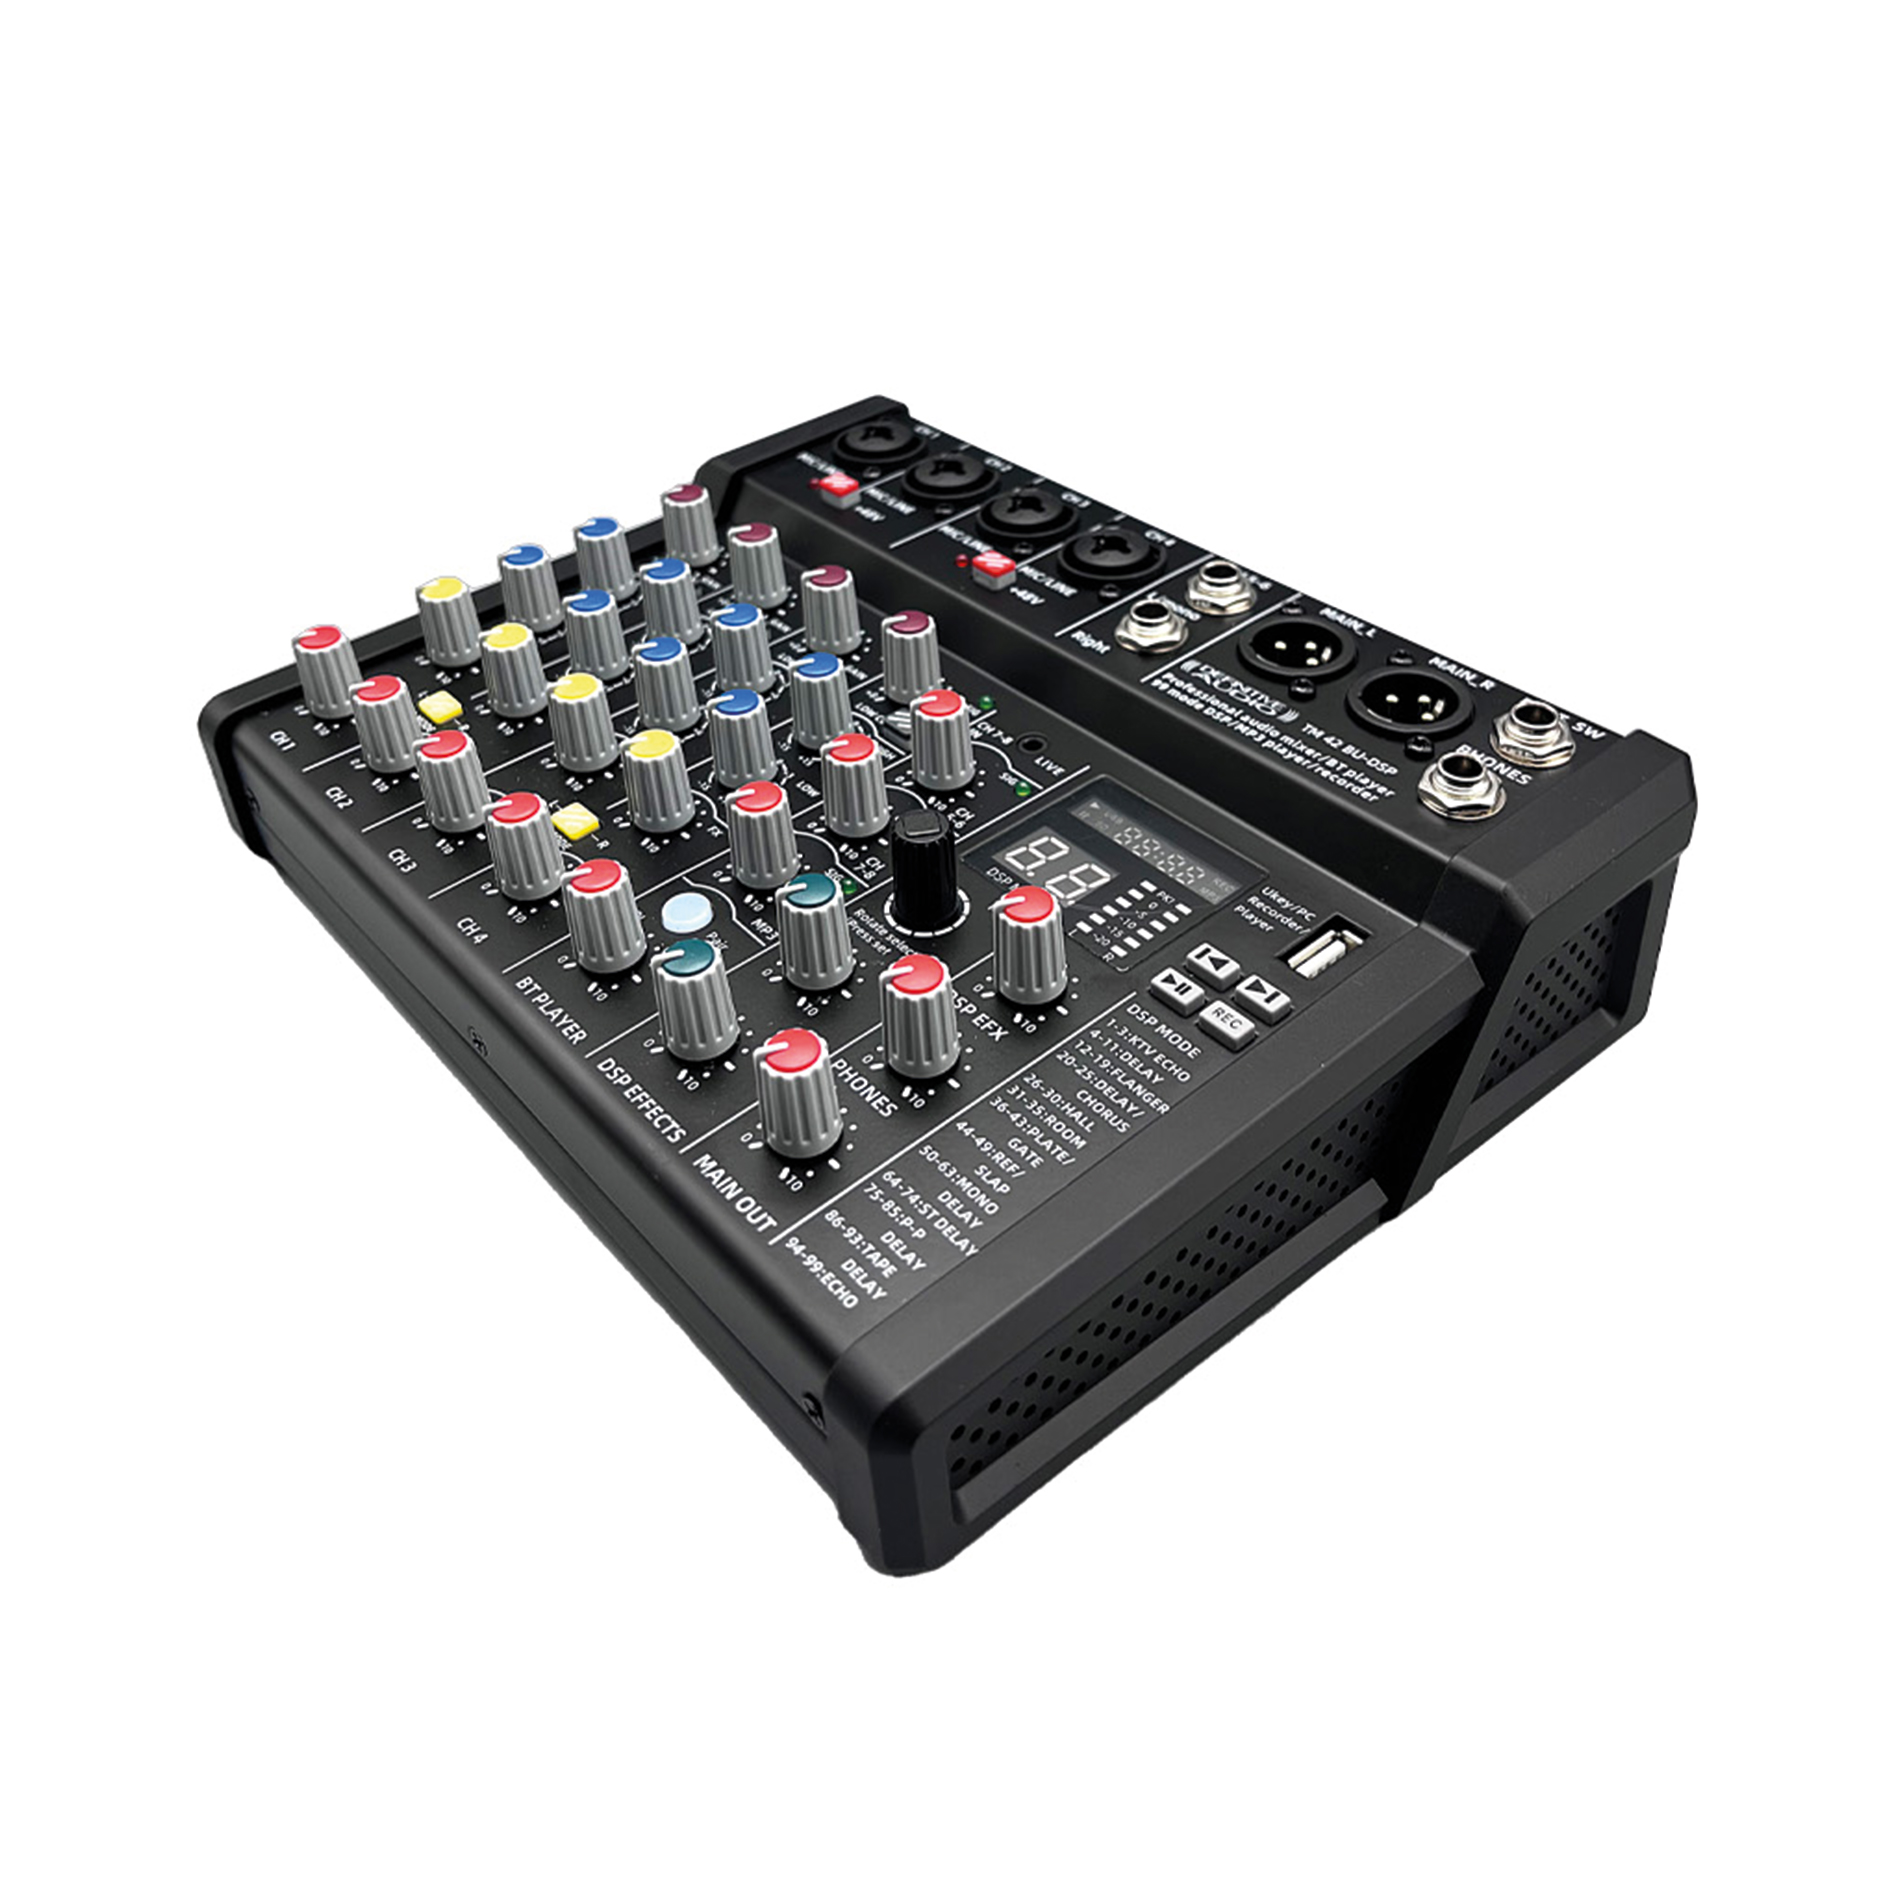 Definitive Audio Tm 42 Bu-dsp - Analog mixing desk - Variation 3